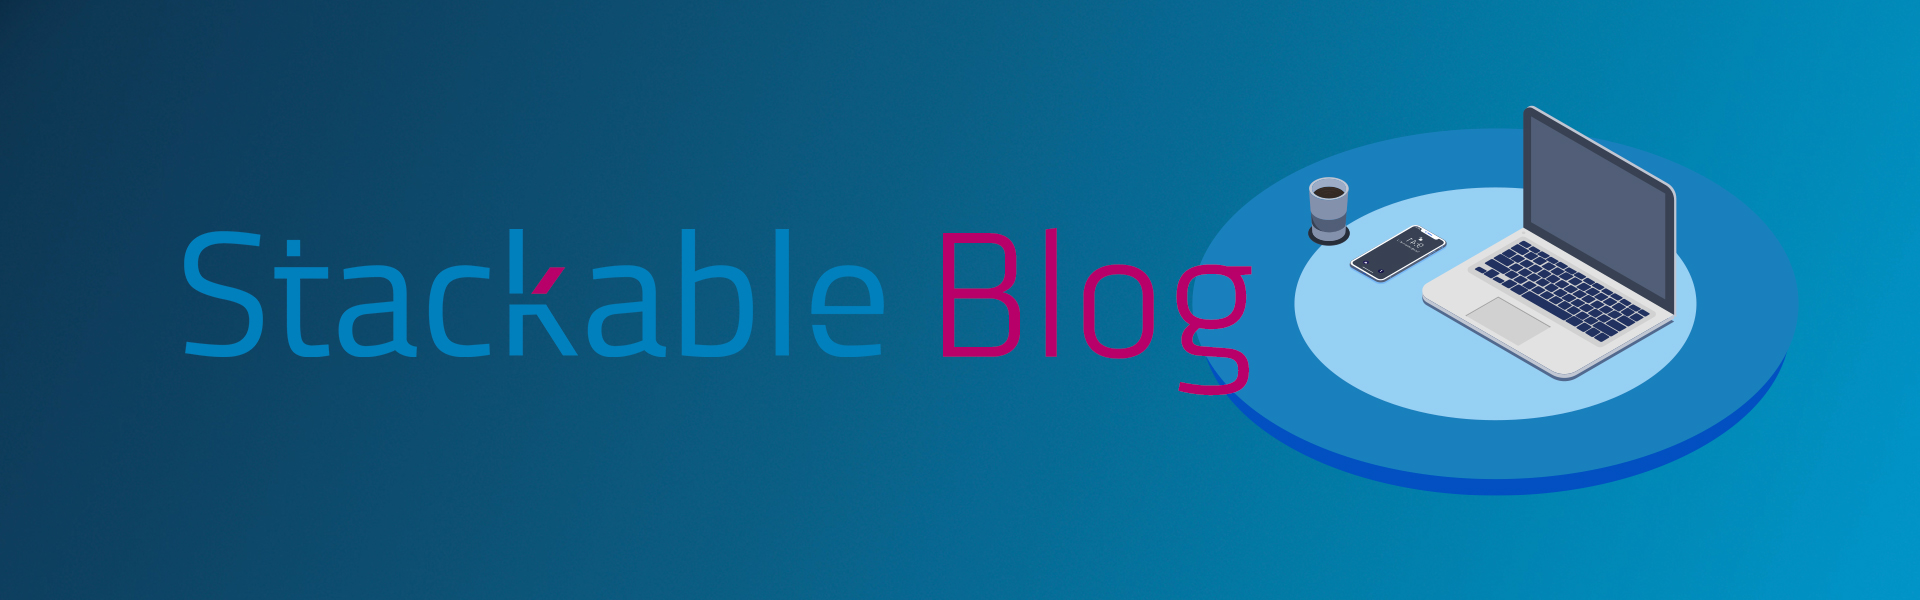 stackable-blog-header-blau-laptop